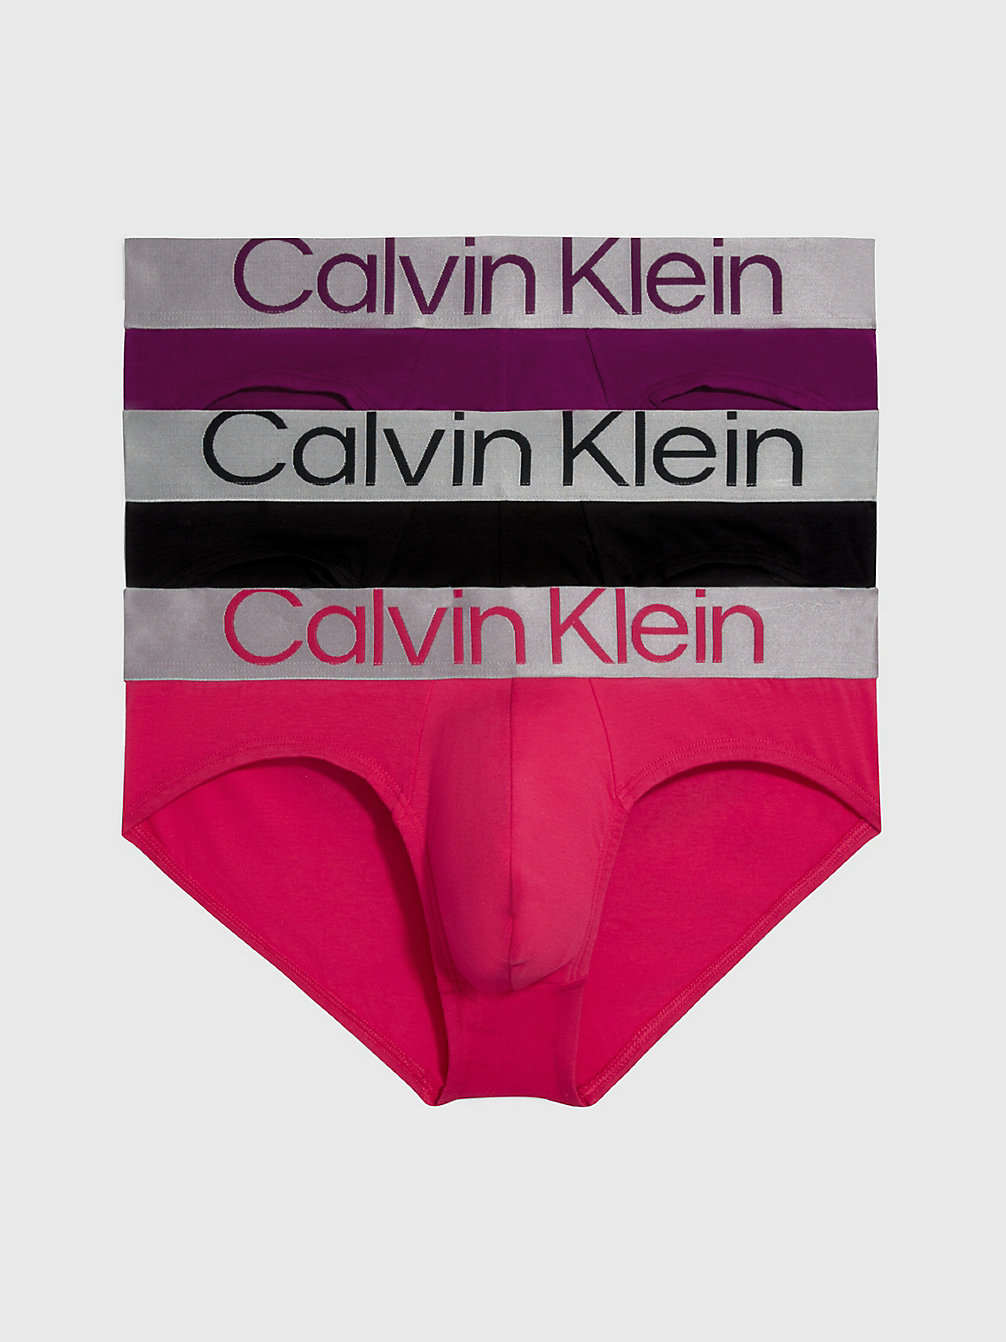 BLACK, PINK SPLENDOR, BERRY MAROON Lot De 3 Slips - Steel Cotton undefined hommes Calvin Klein